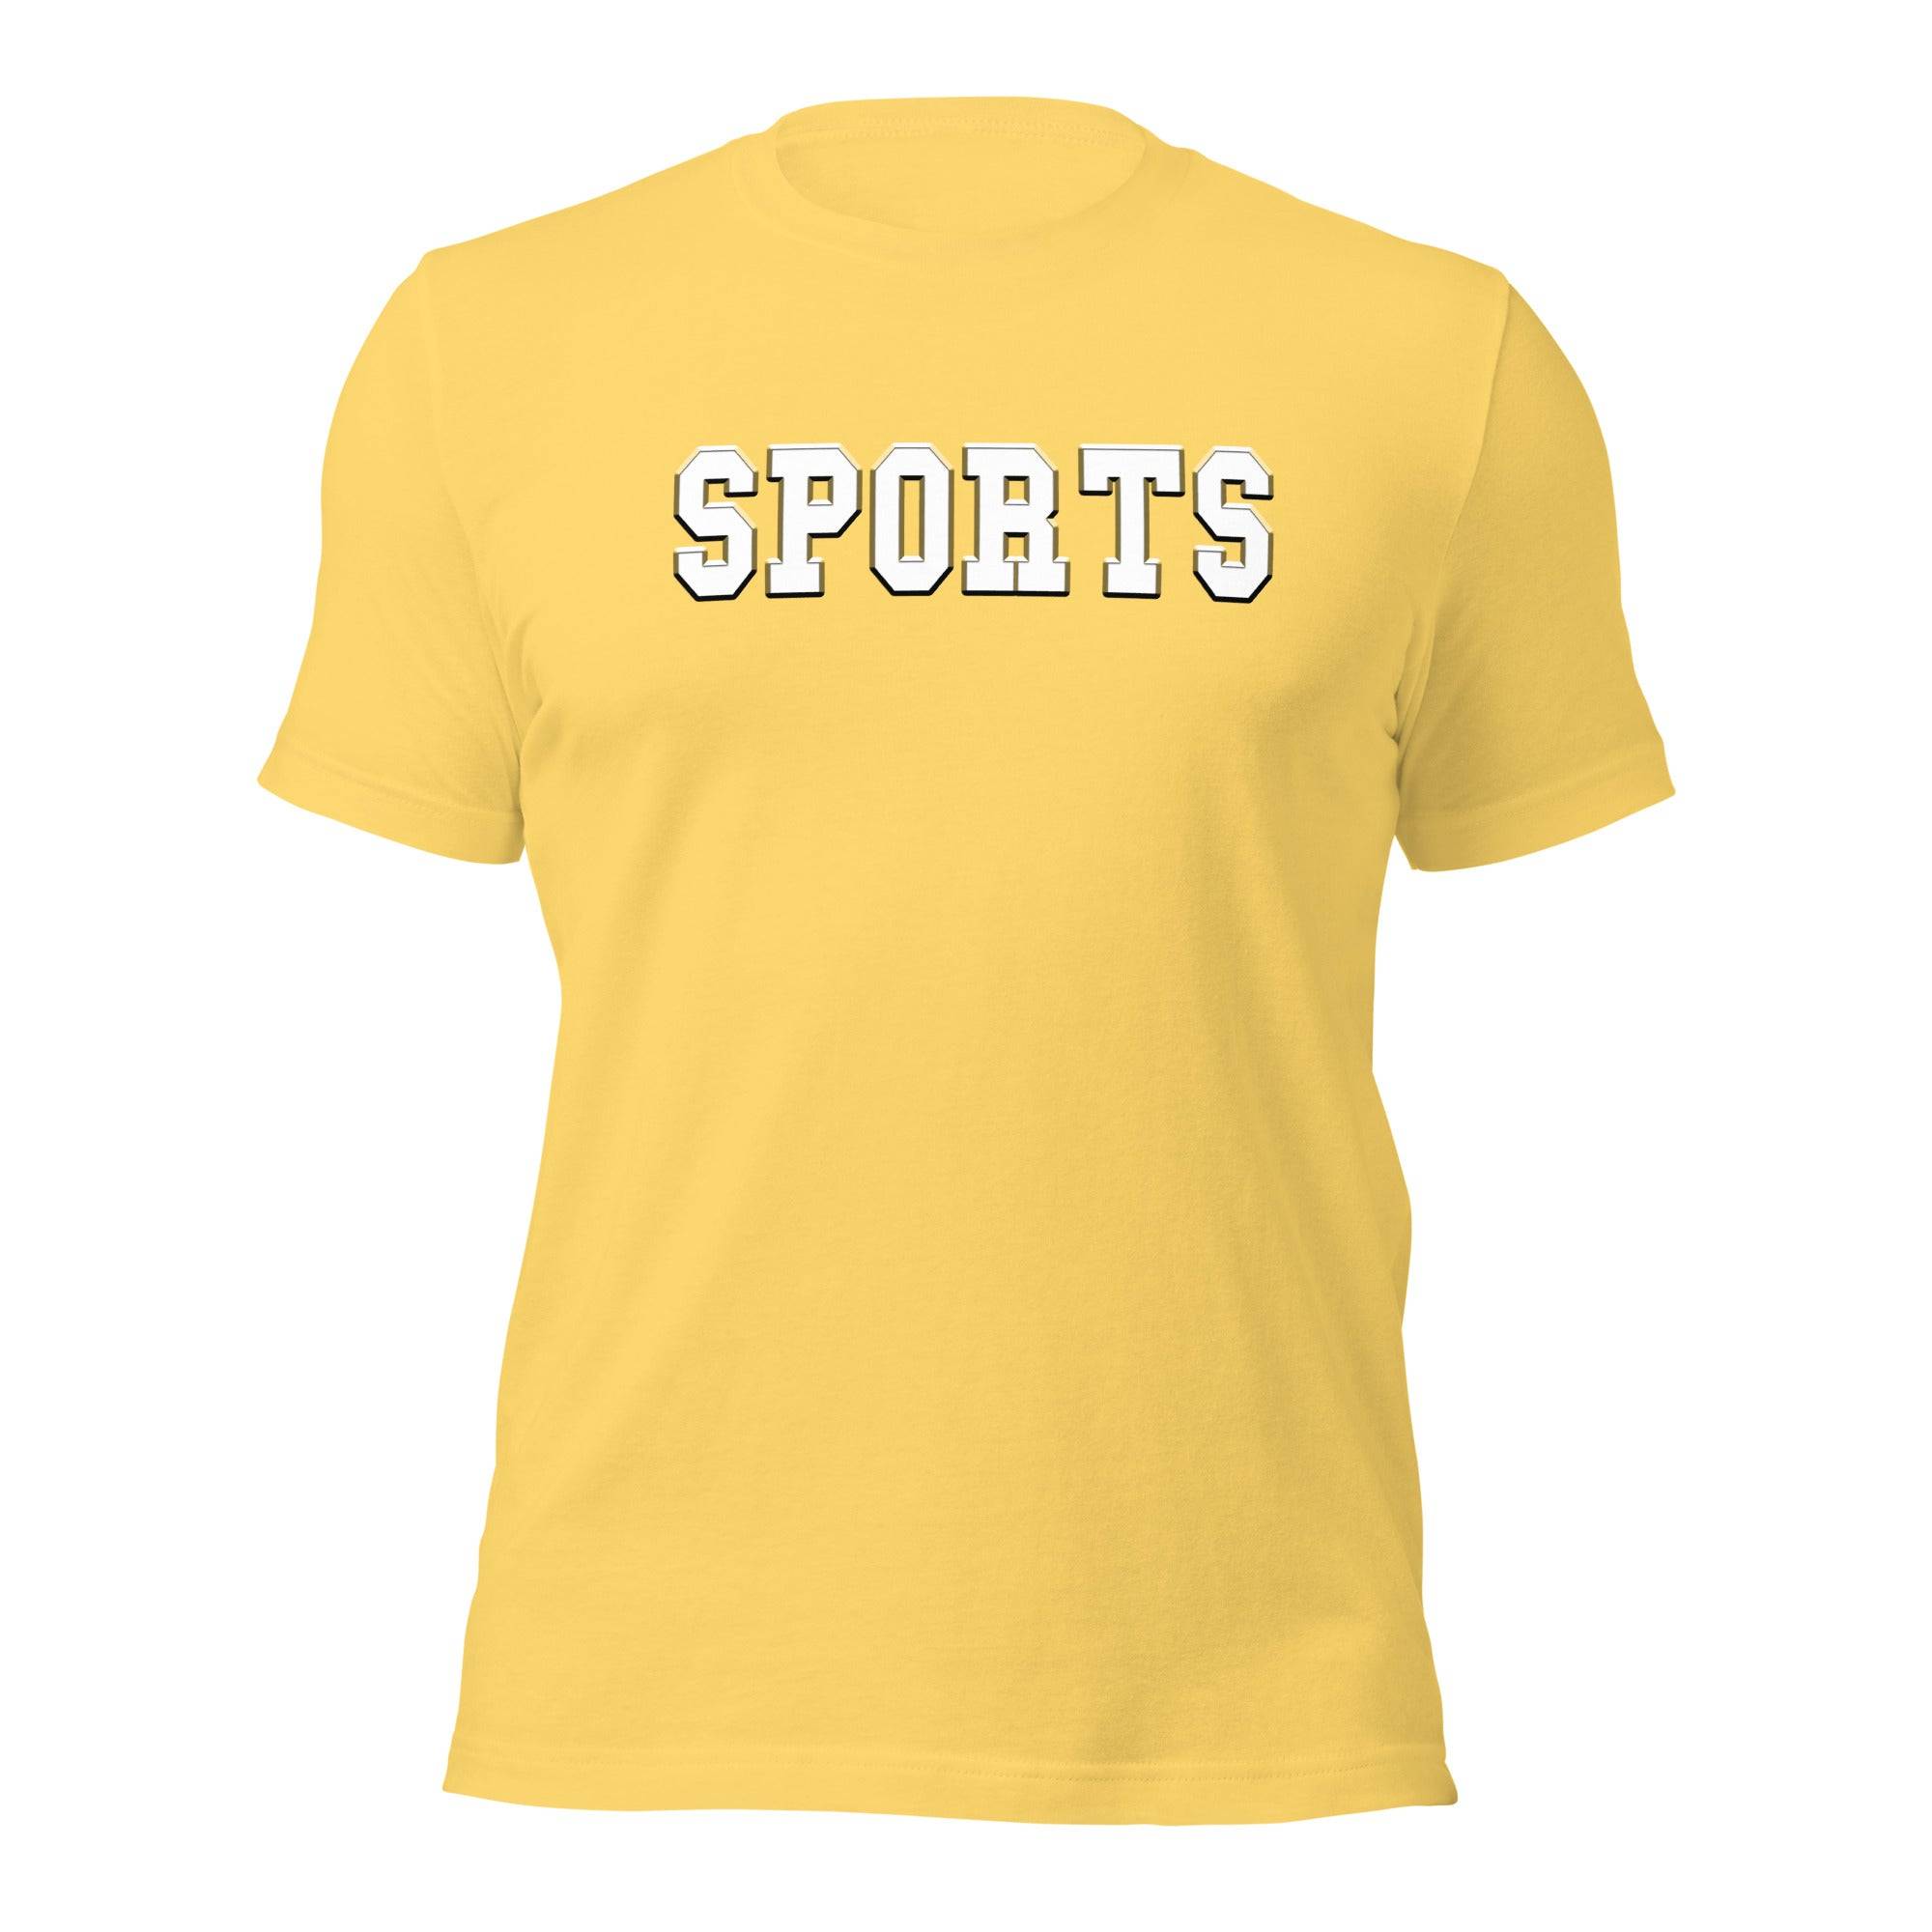 SPORTS! Unisex t-shirt